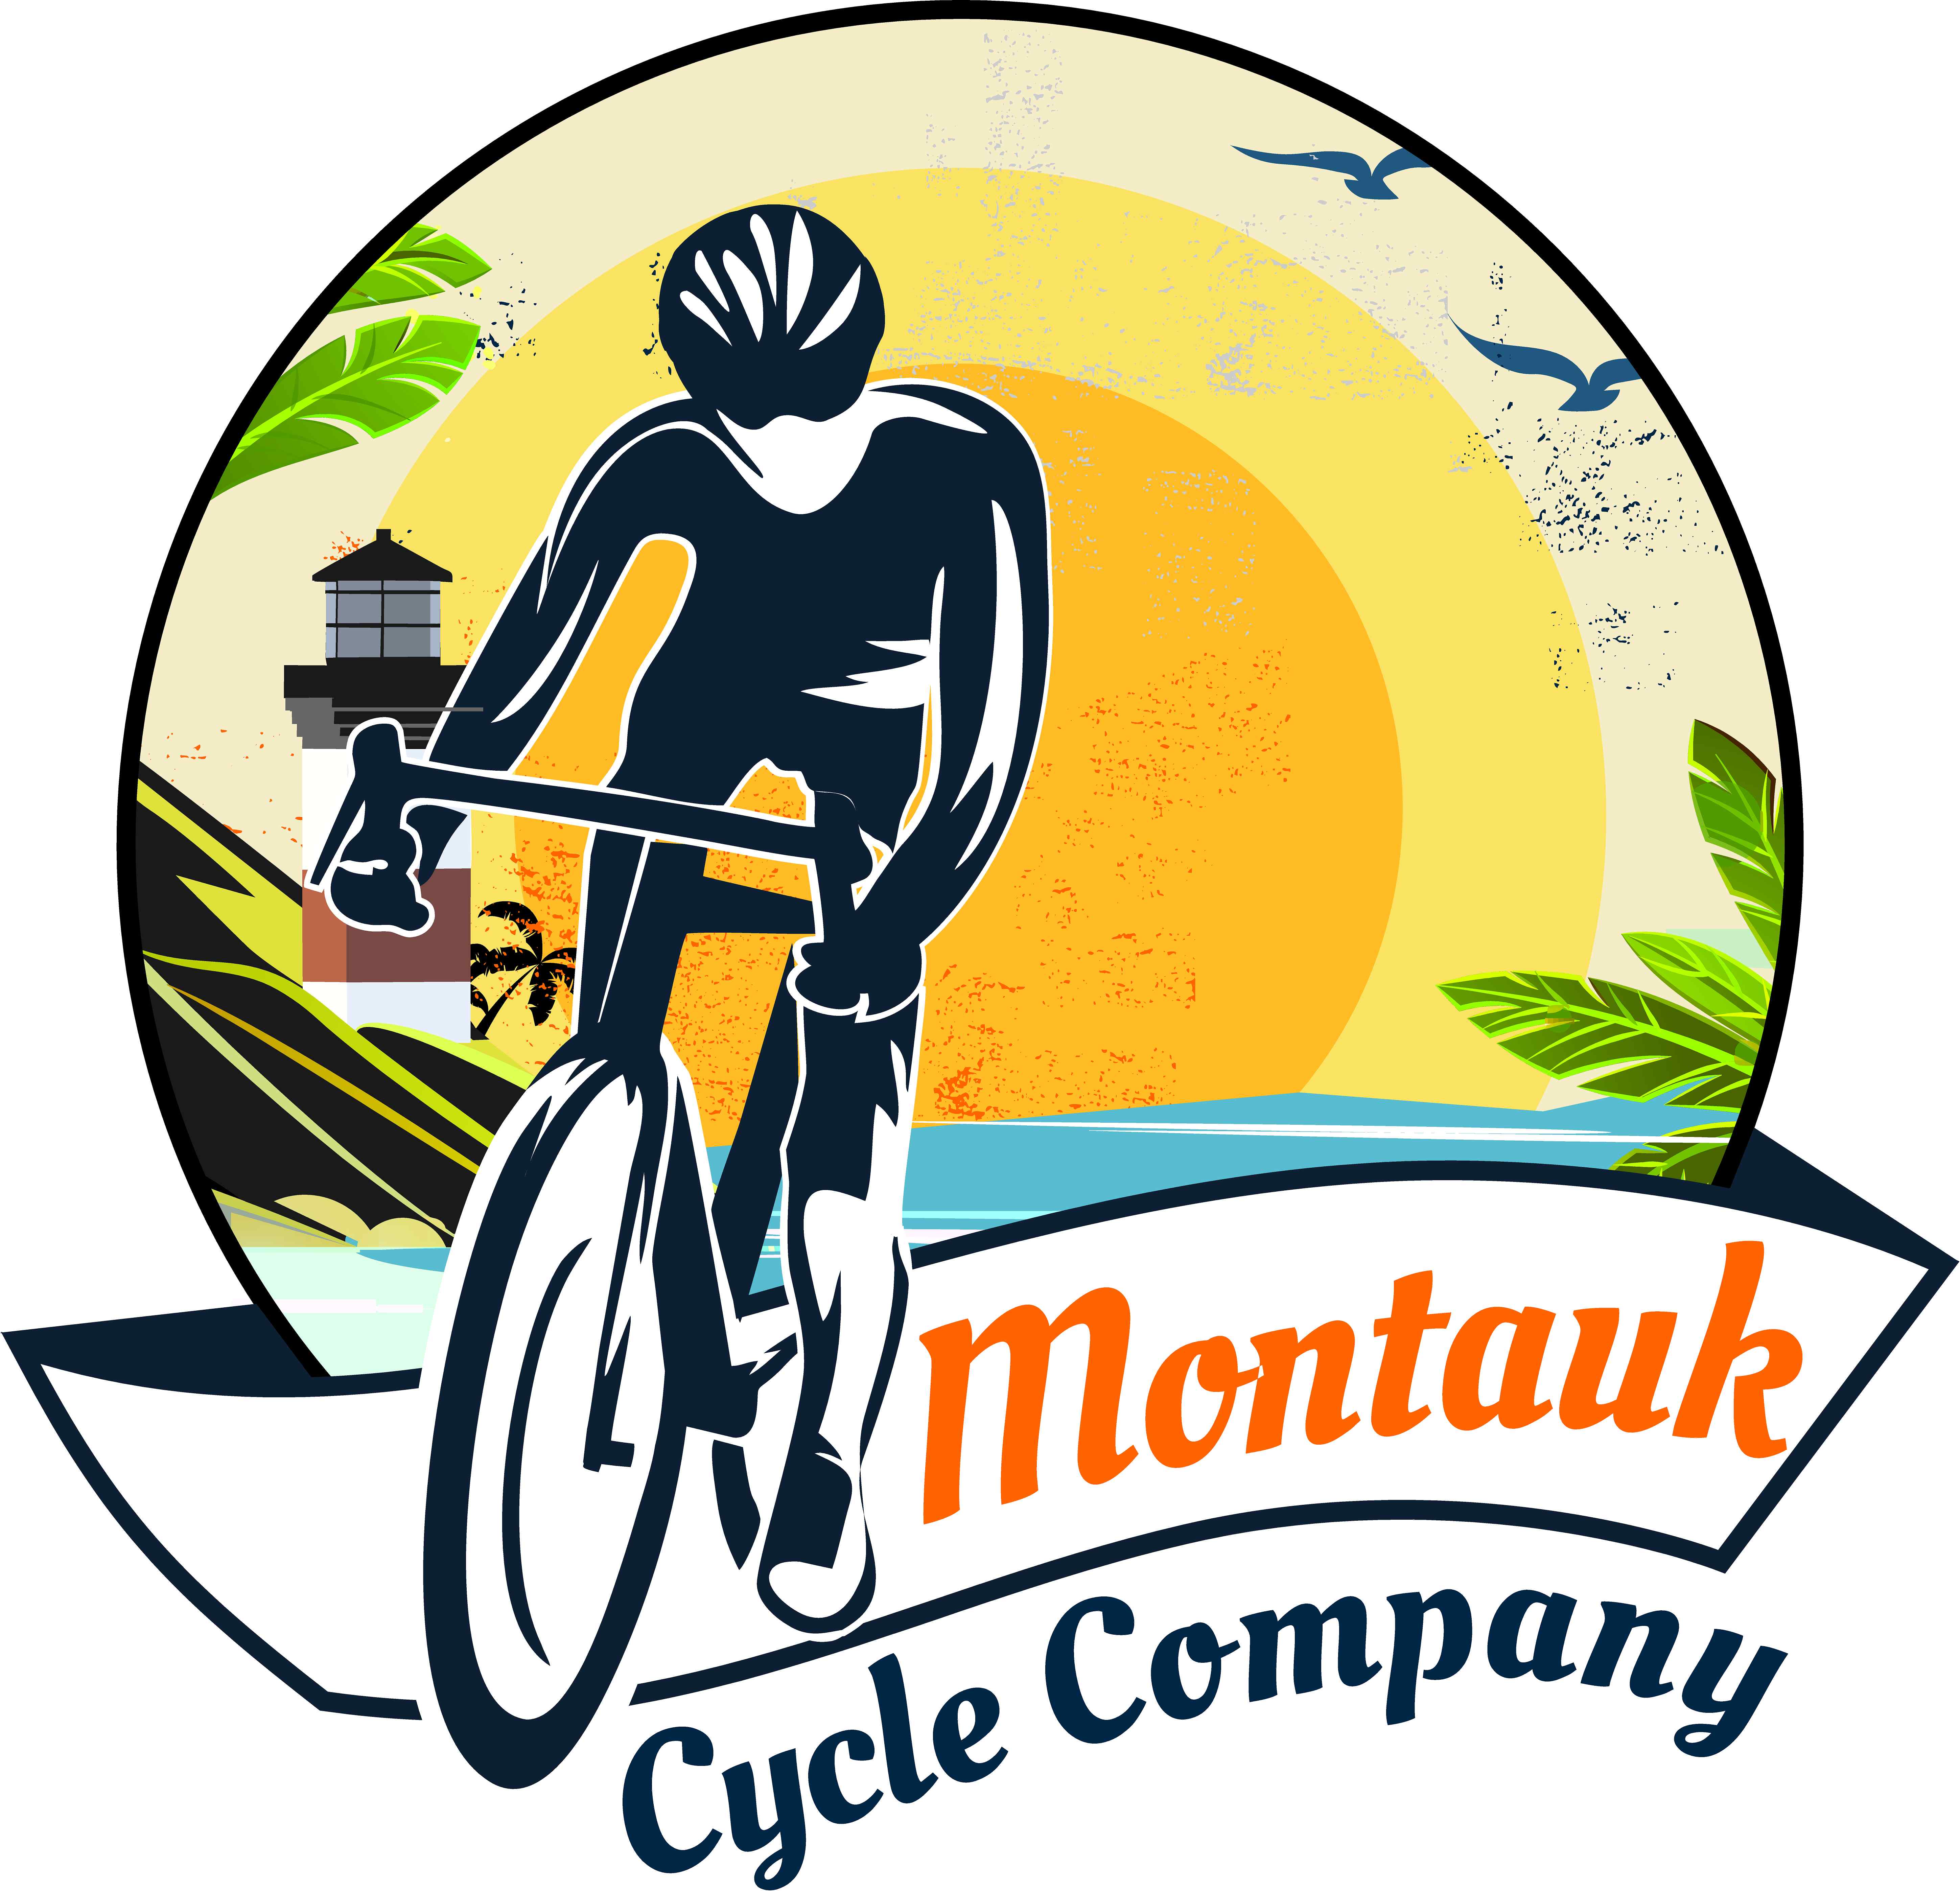 Montauk Cycle Company